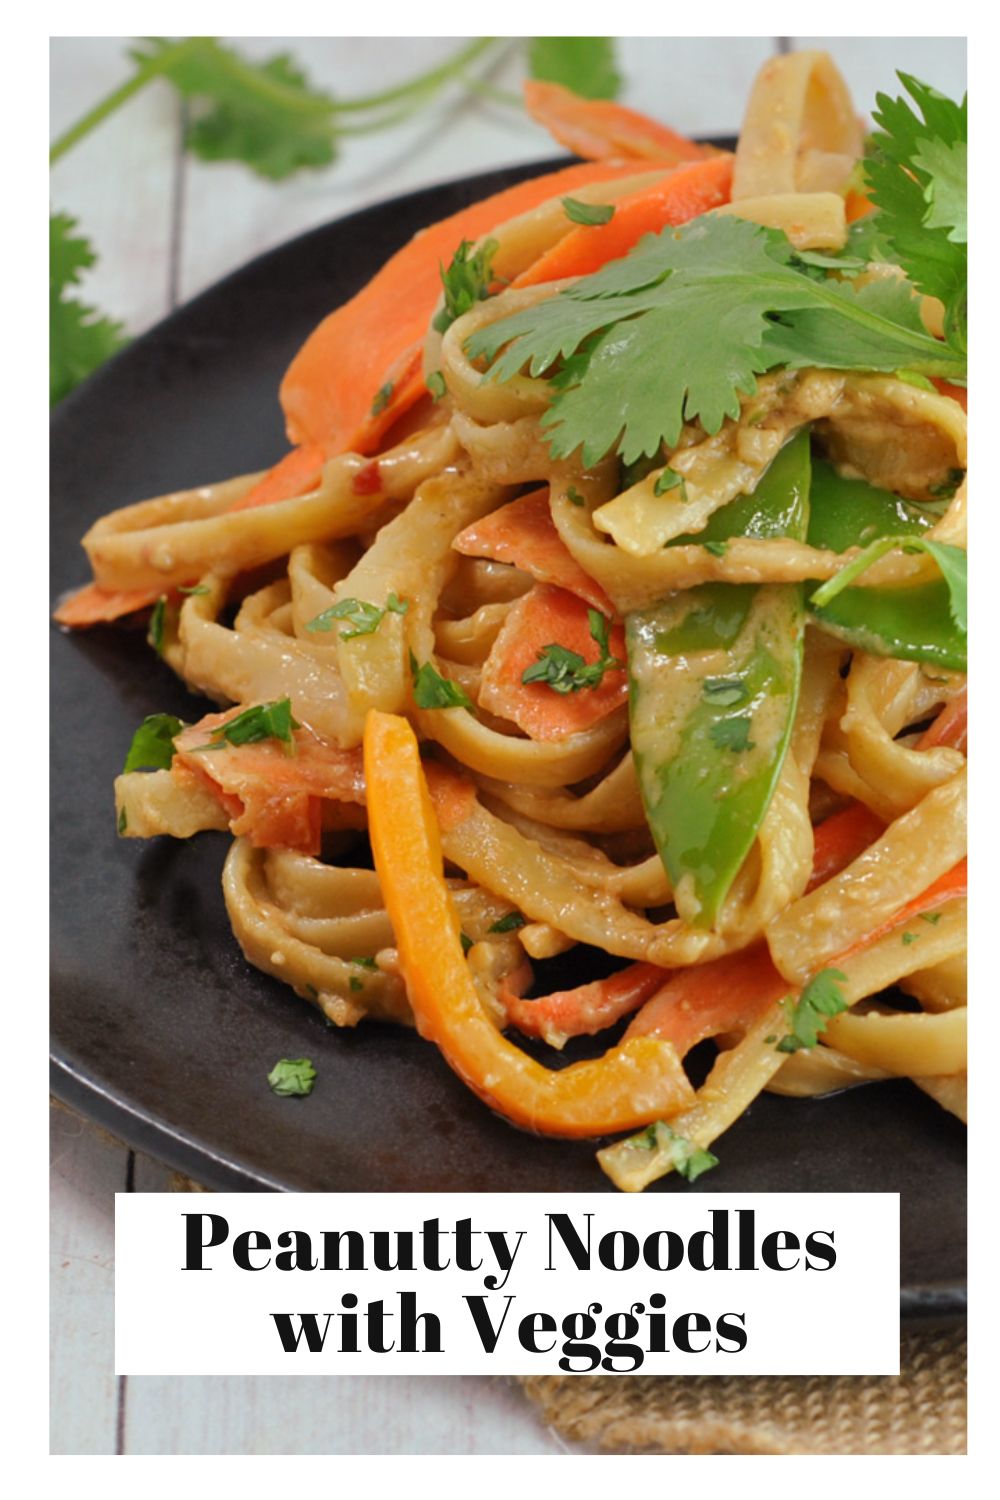 Peanutty Noodles with Veggies via @preventionrd